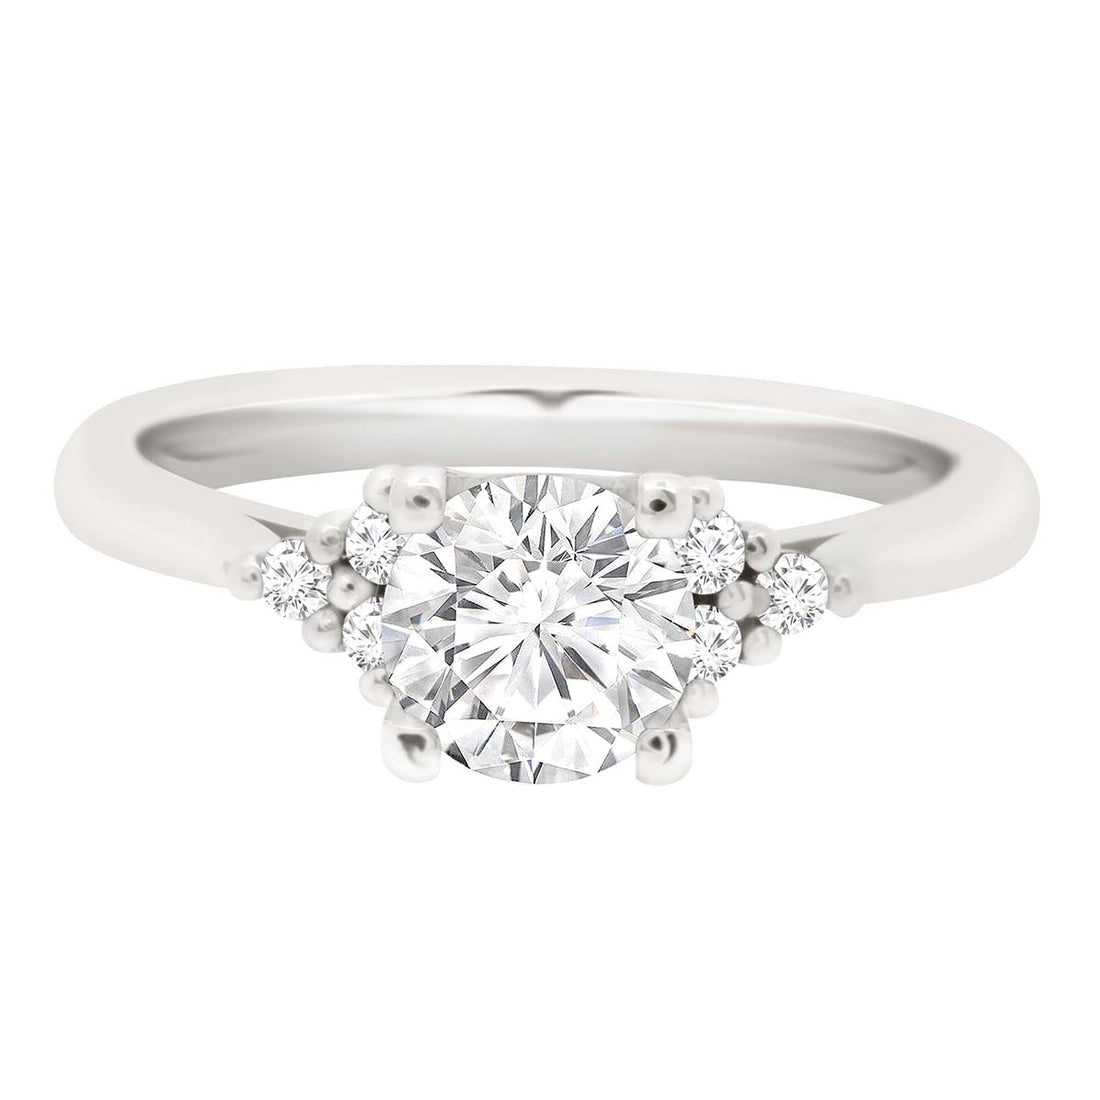 Handmade Engagement Ring in white gold